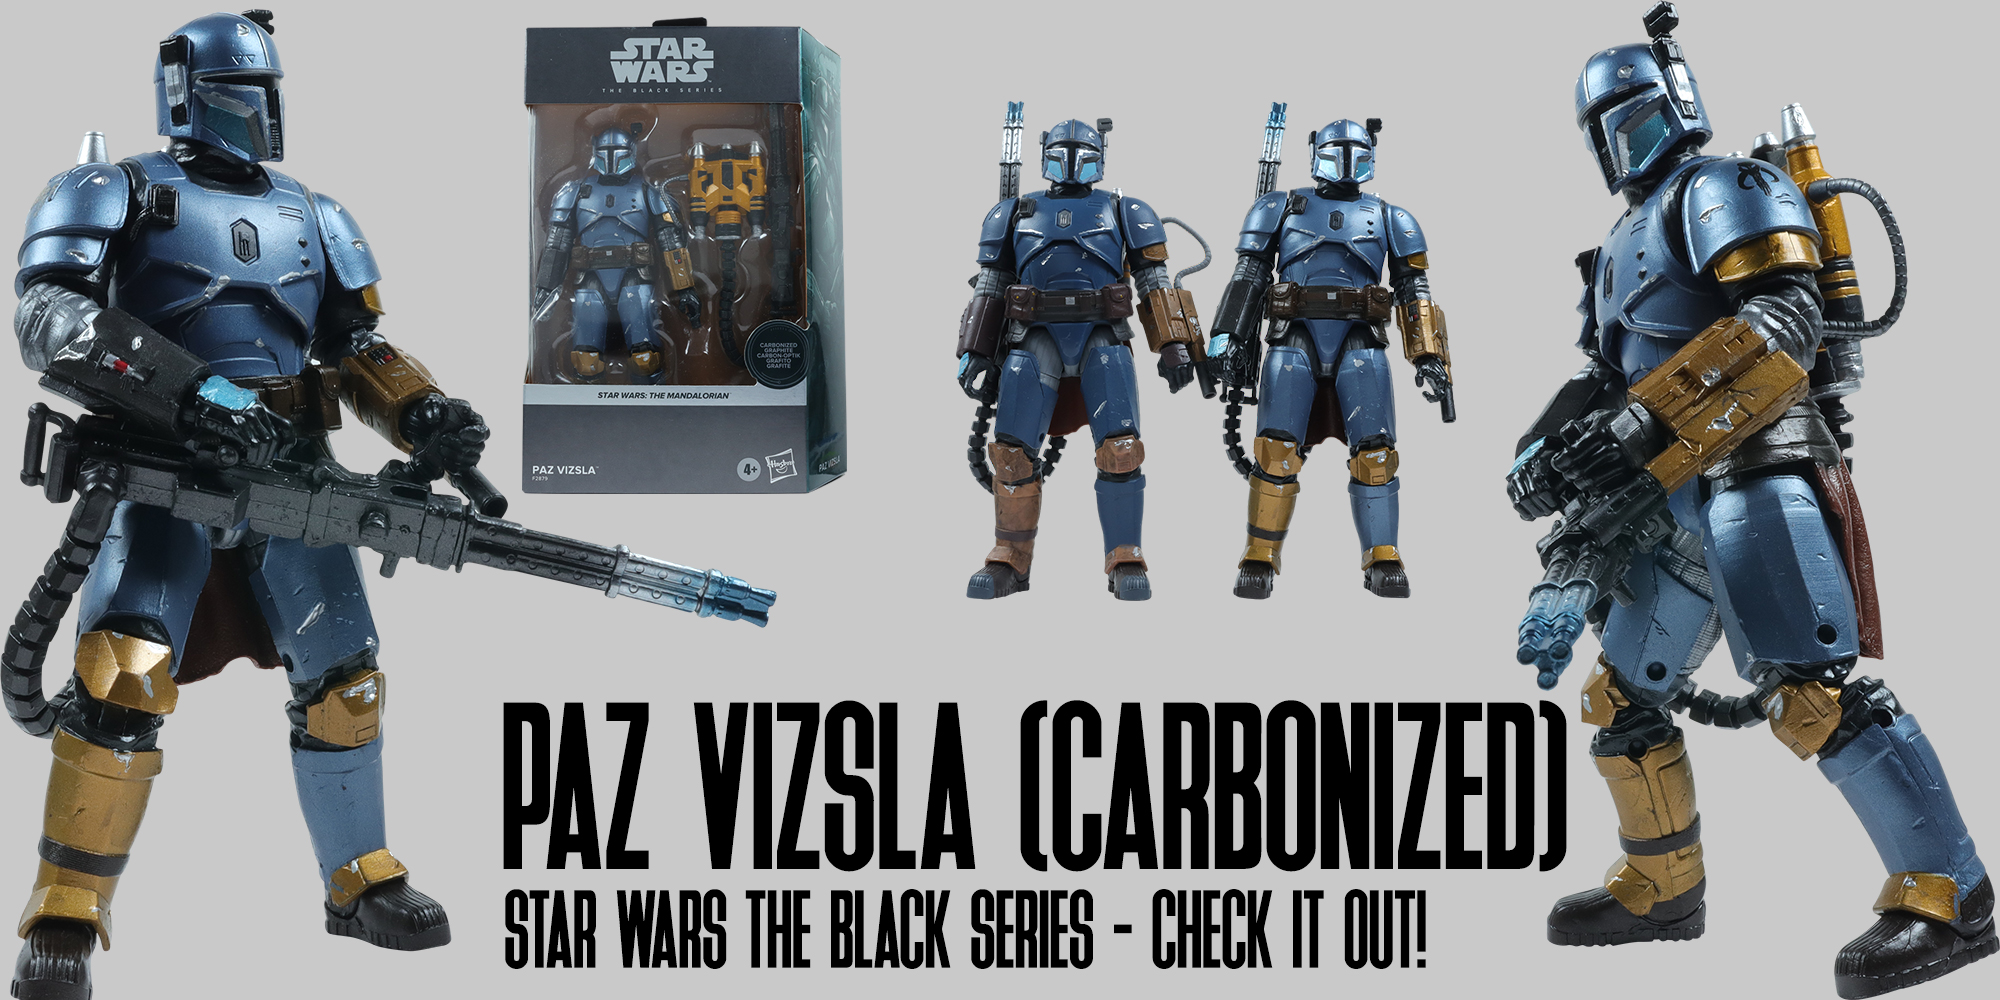 Black Series Paz Vizsla - Now Archived - Check It Out!